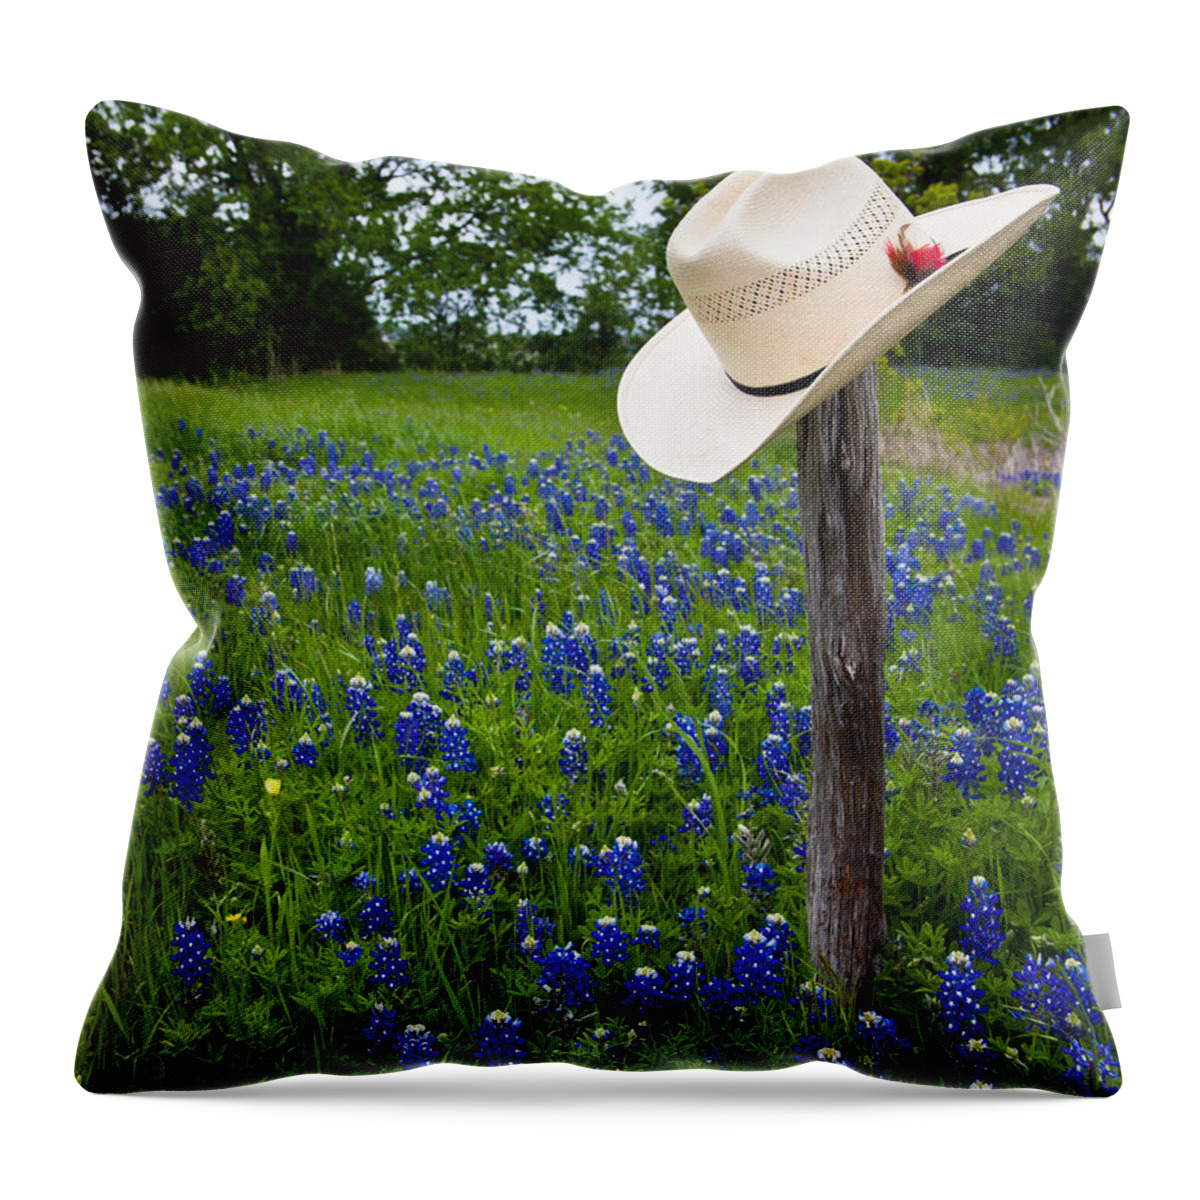 Texas Throw Pillow featuring the photograph Texas by Mark Alder